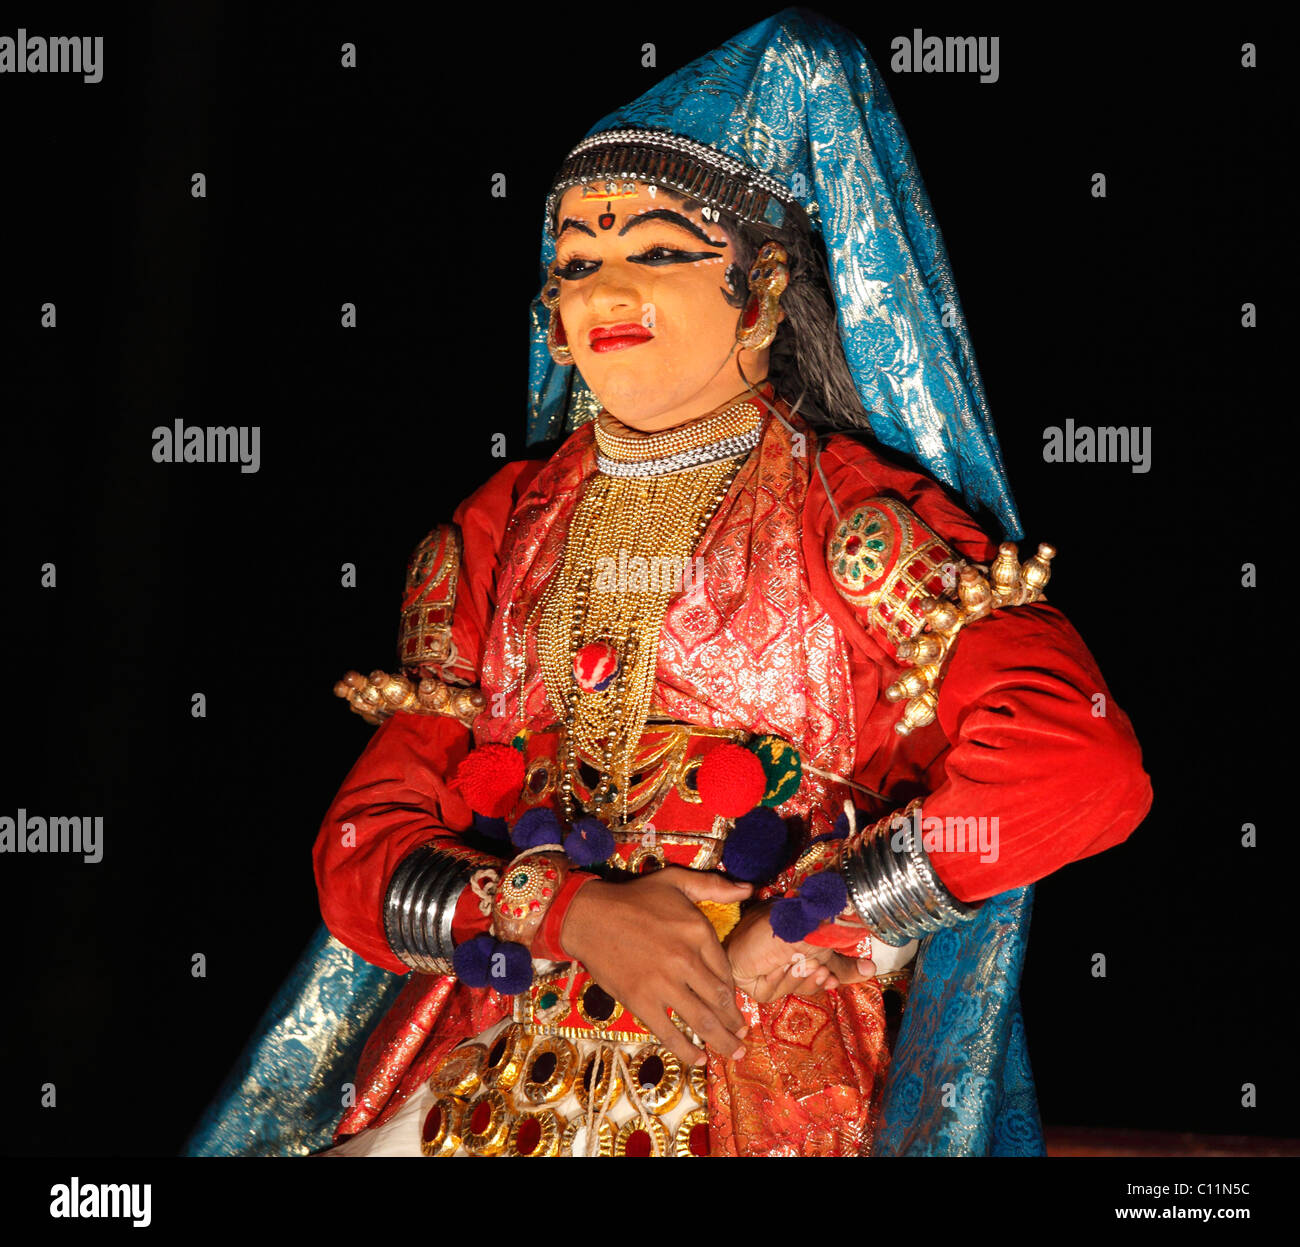 La danse Kathakali, personnage Minukku, Kerala, Inde du sud, l'Asie Banque D'Images